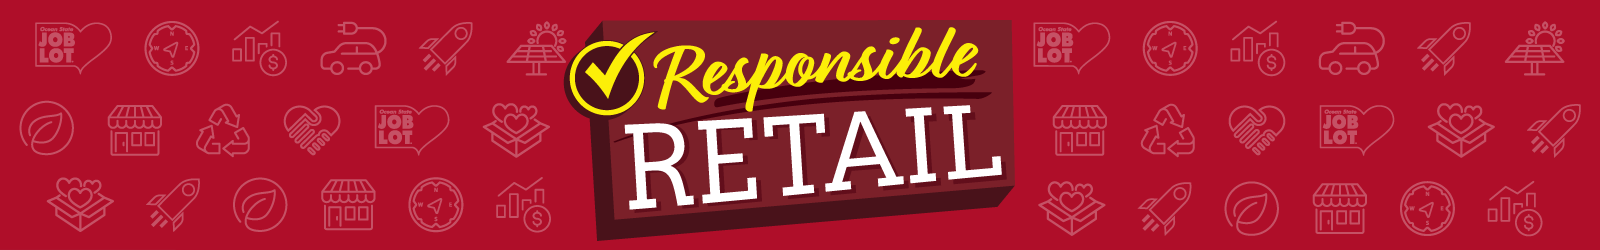 Responsible Retail